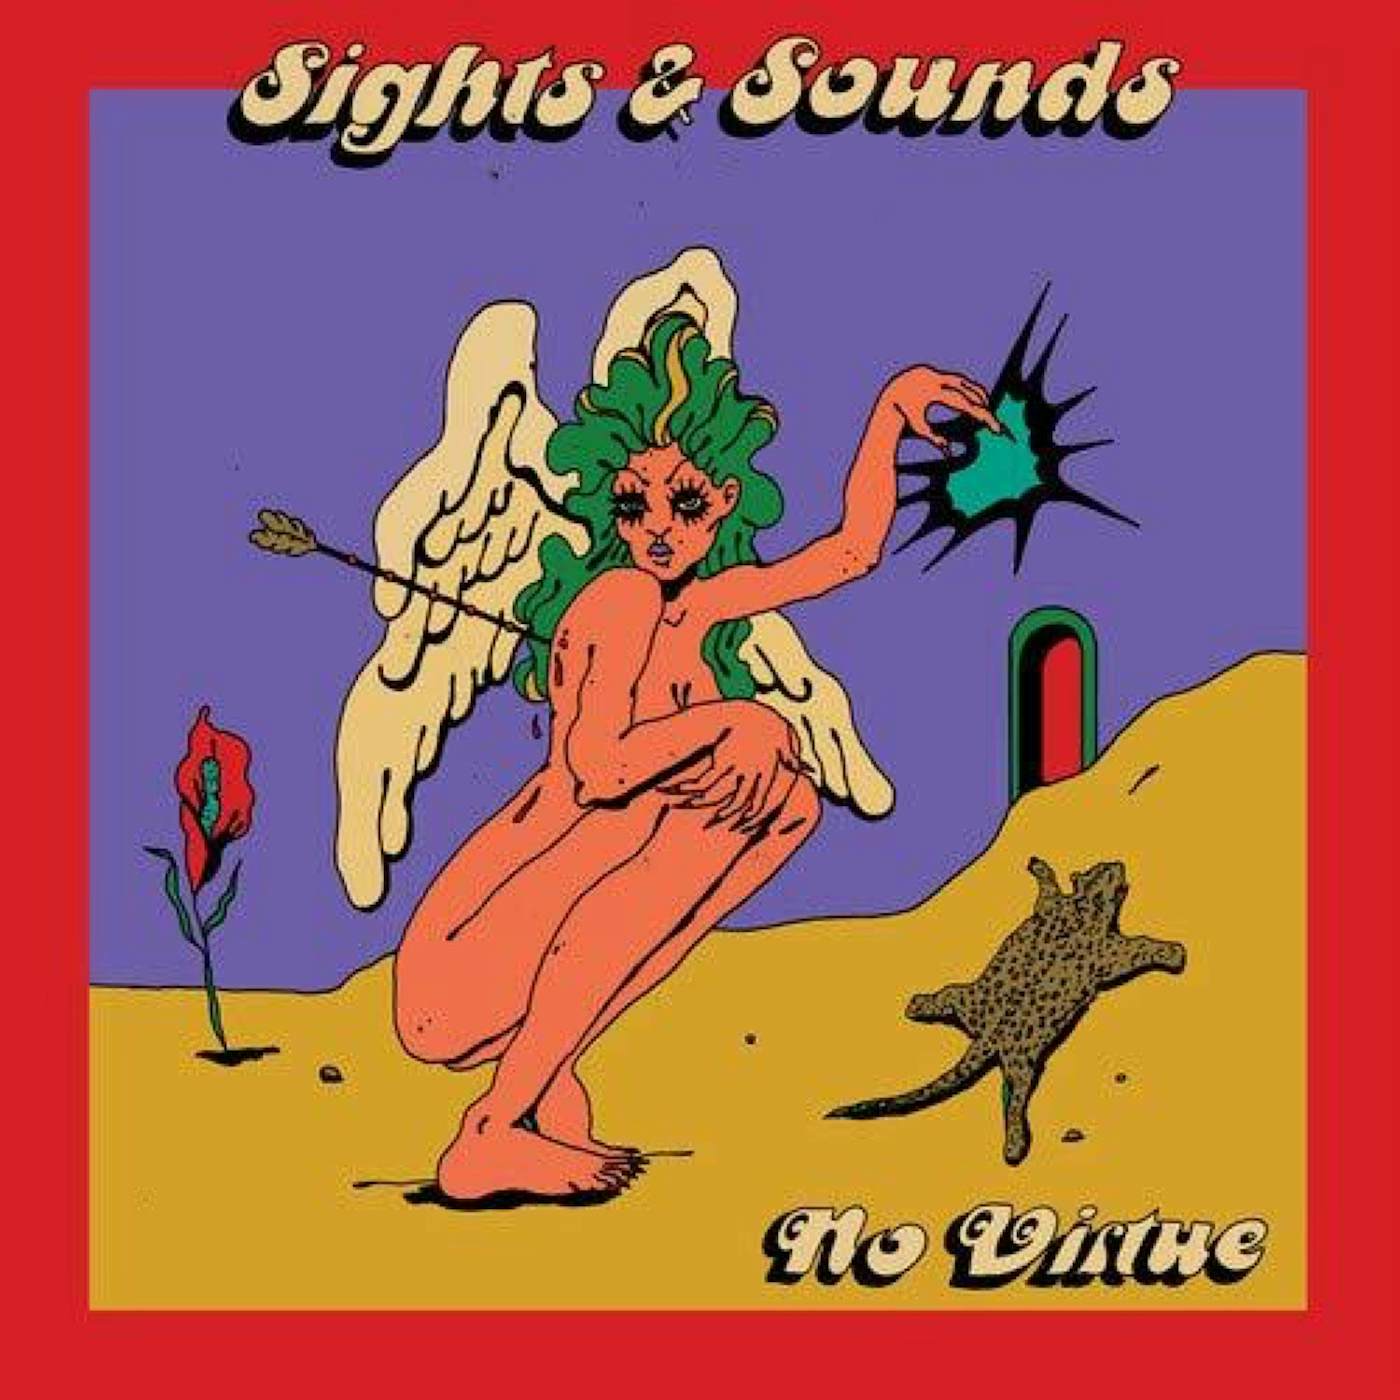 Sights & Sounds No Virtue Vinyl Record